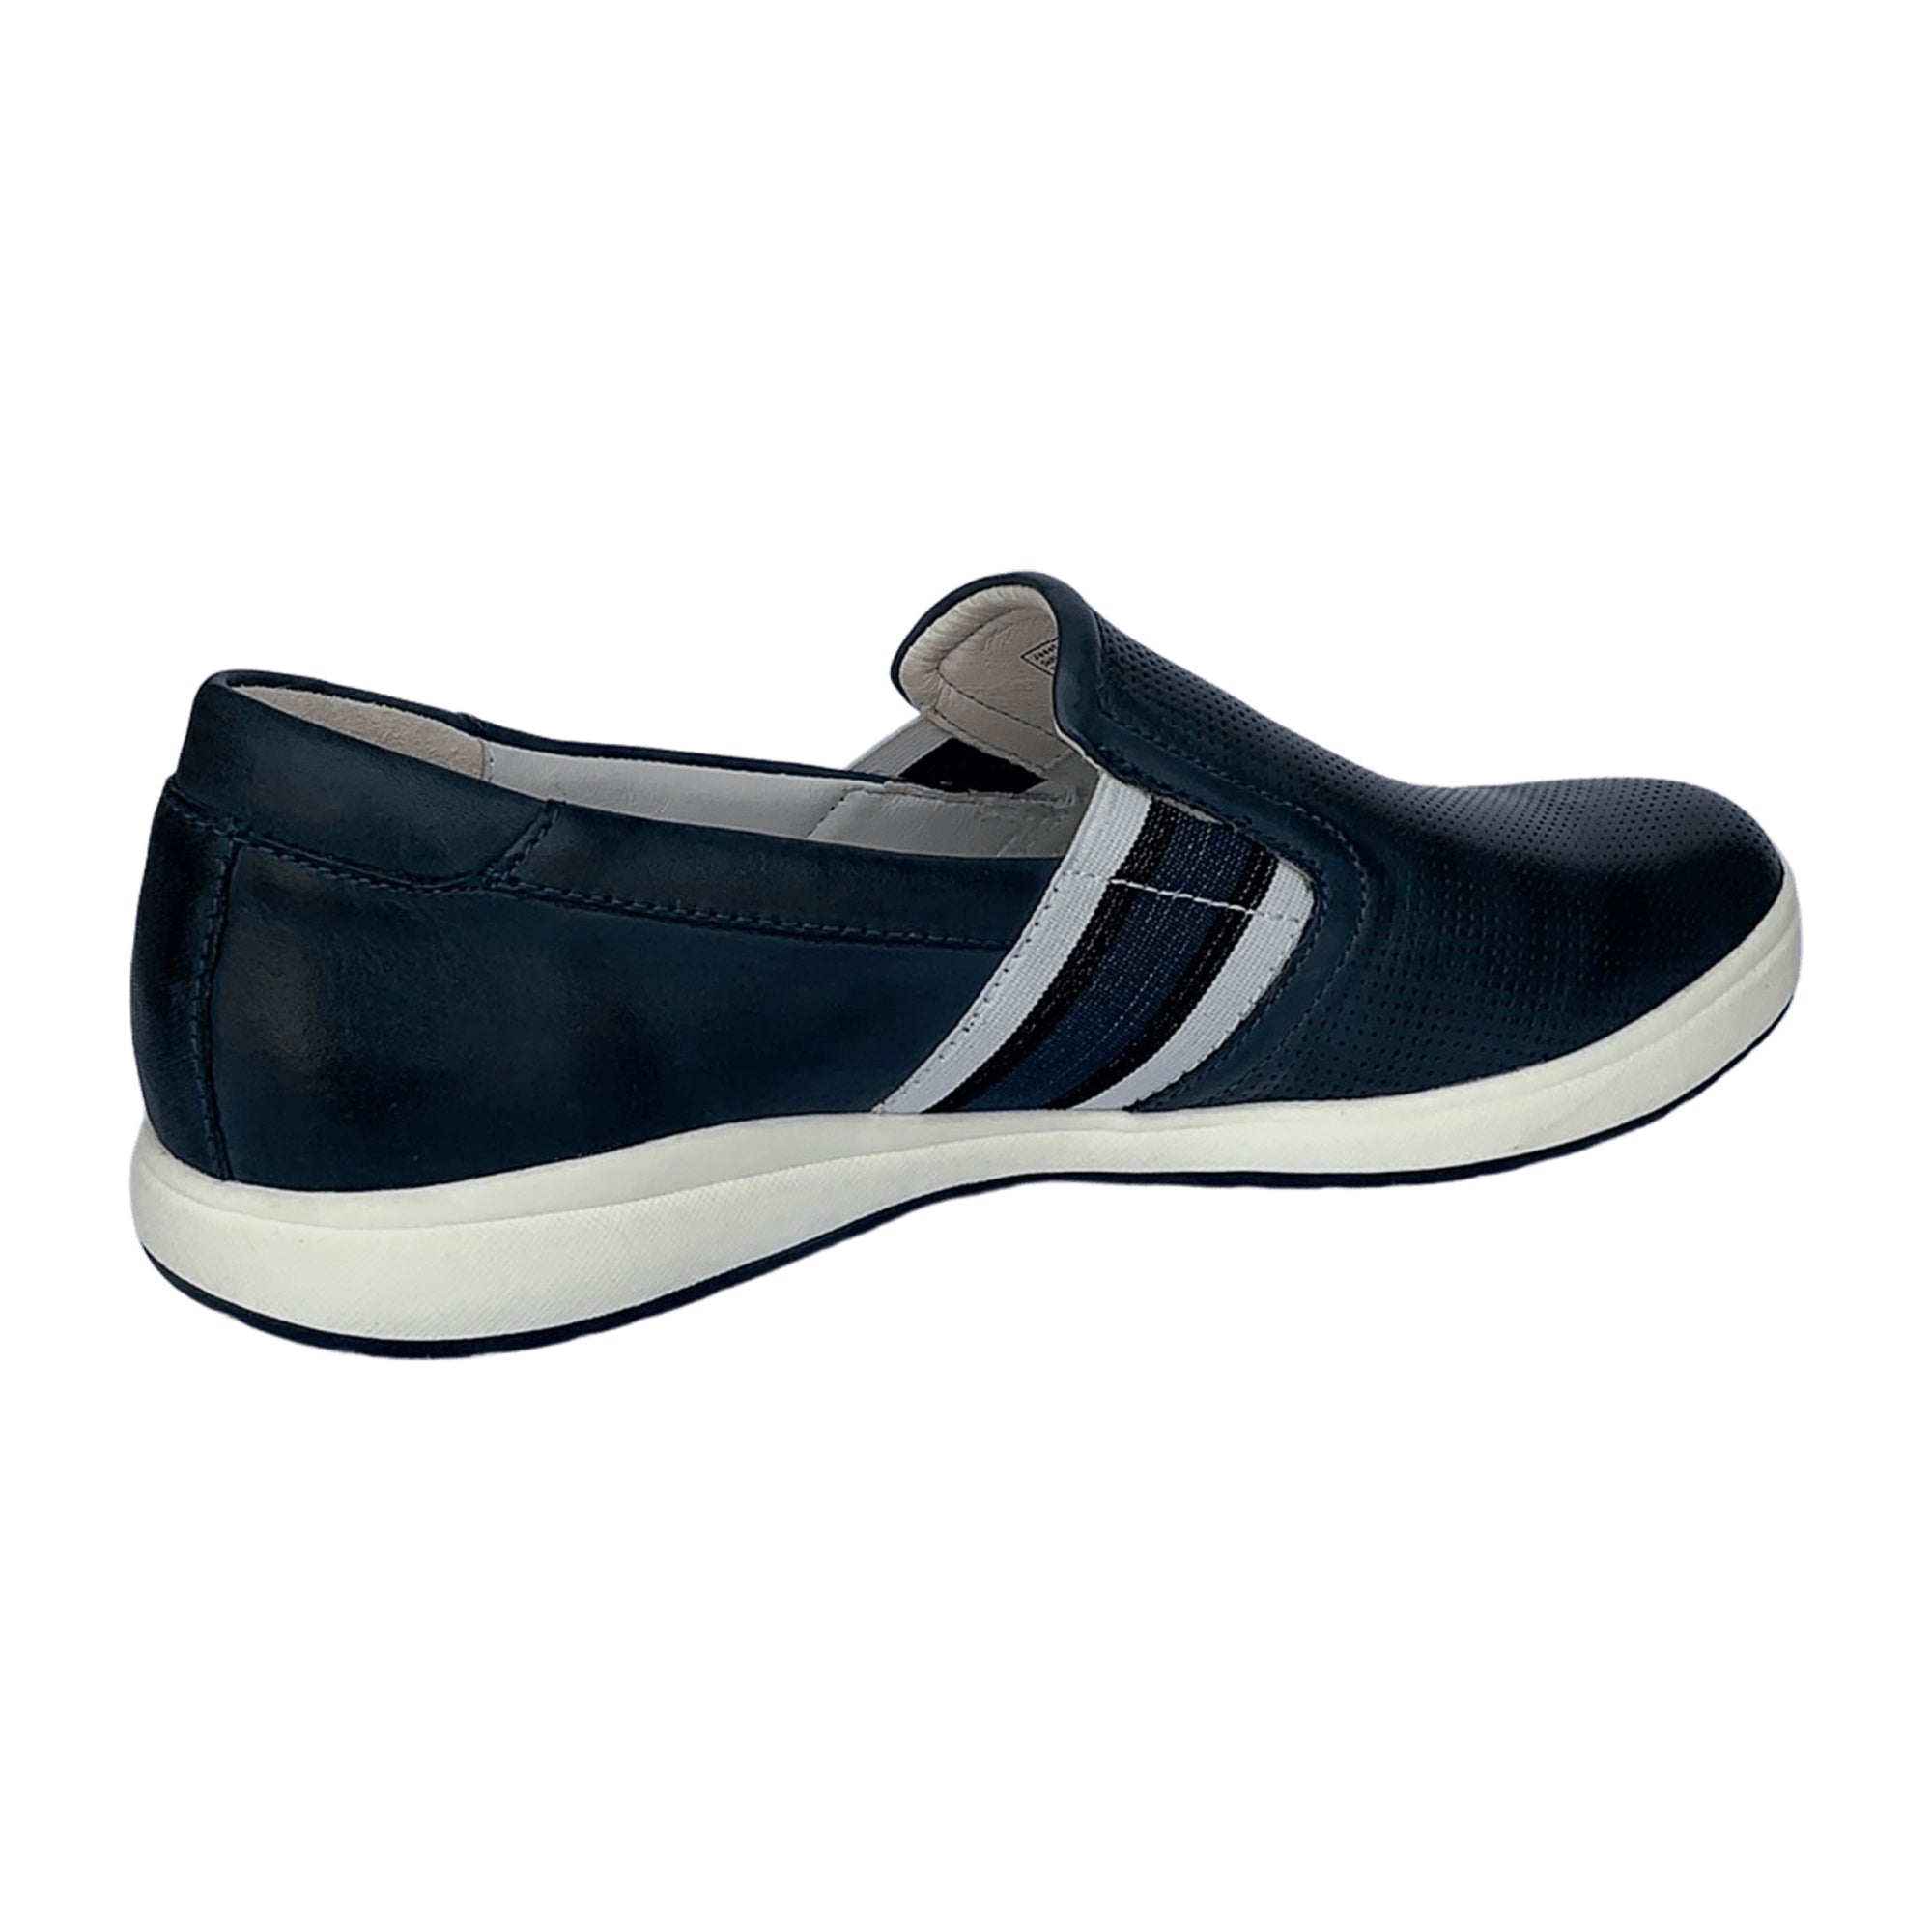 Josef Seibel Aqua-Combi Women's Shoes in Blue